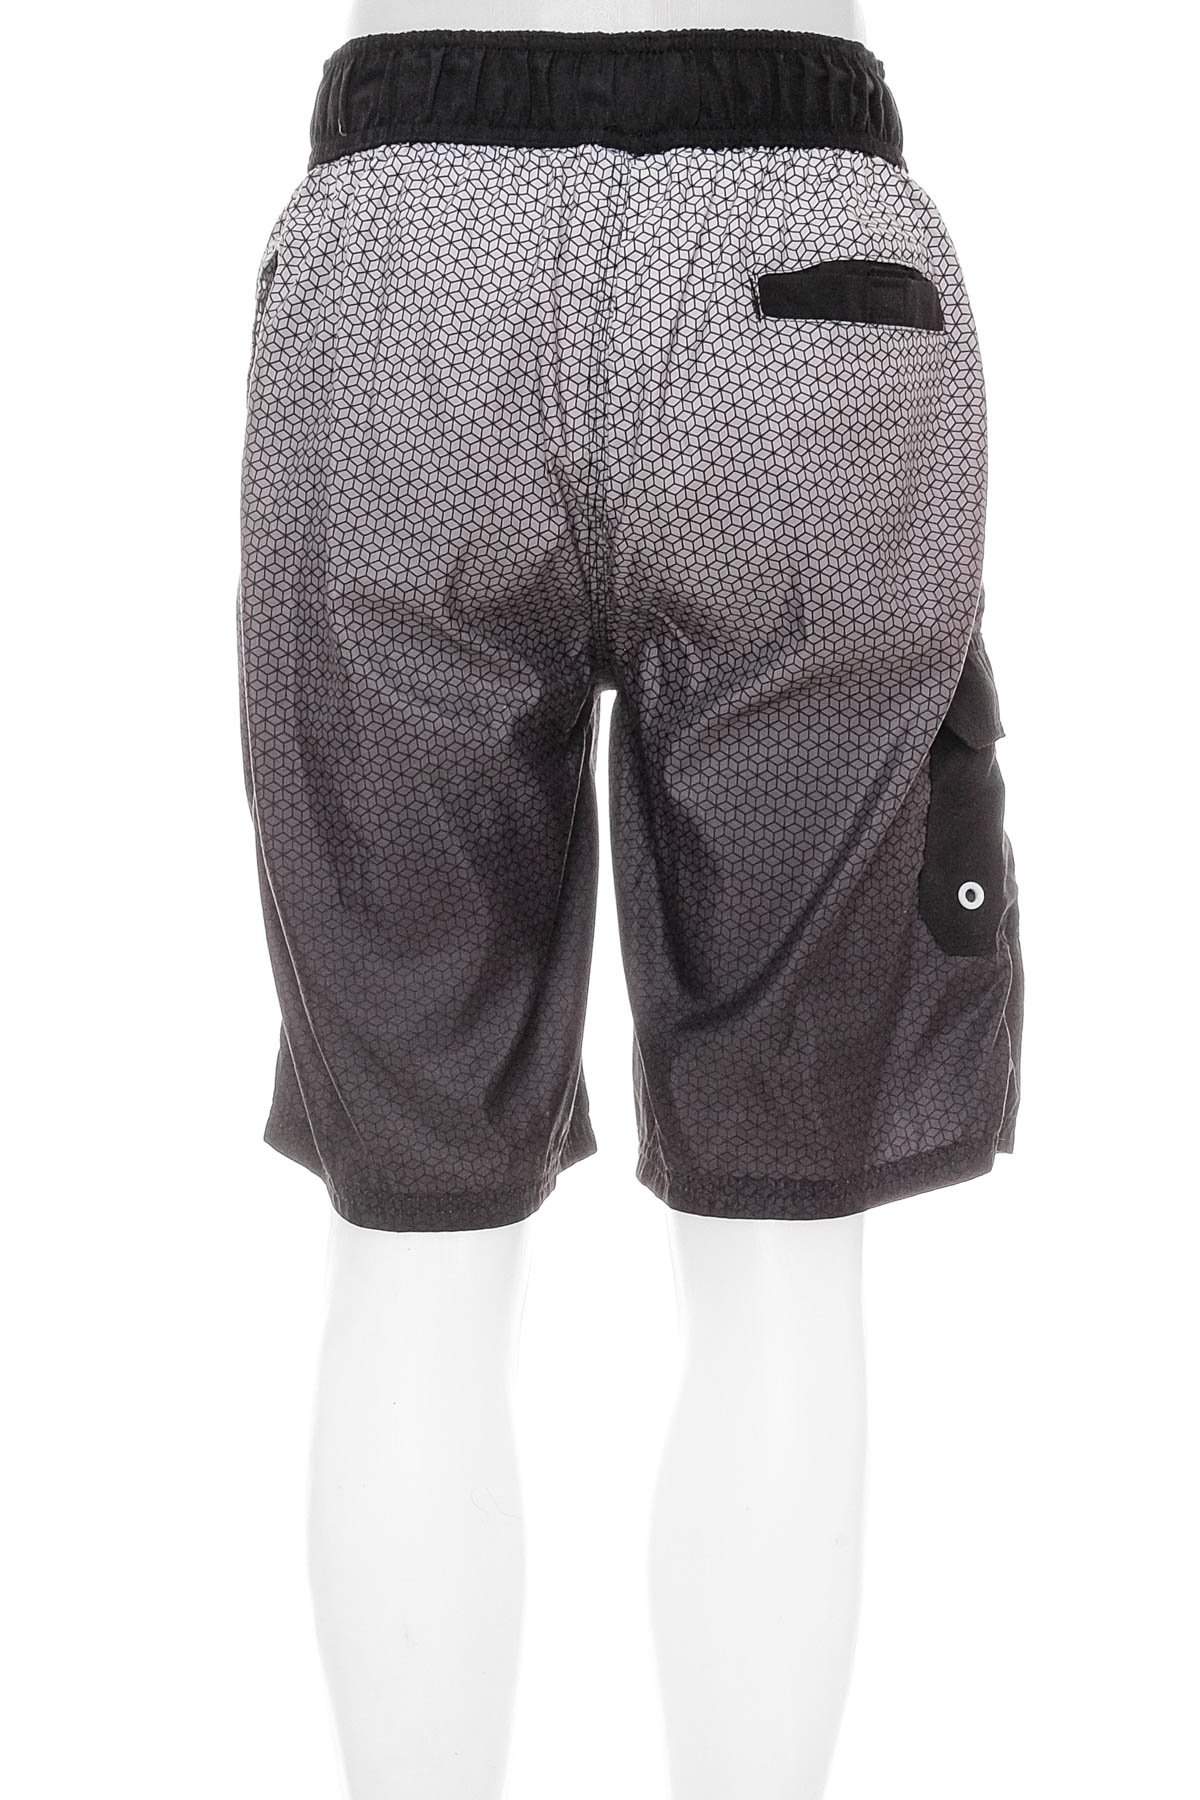 Men's shorts - Palm Springs - 1